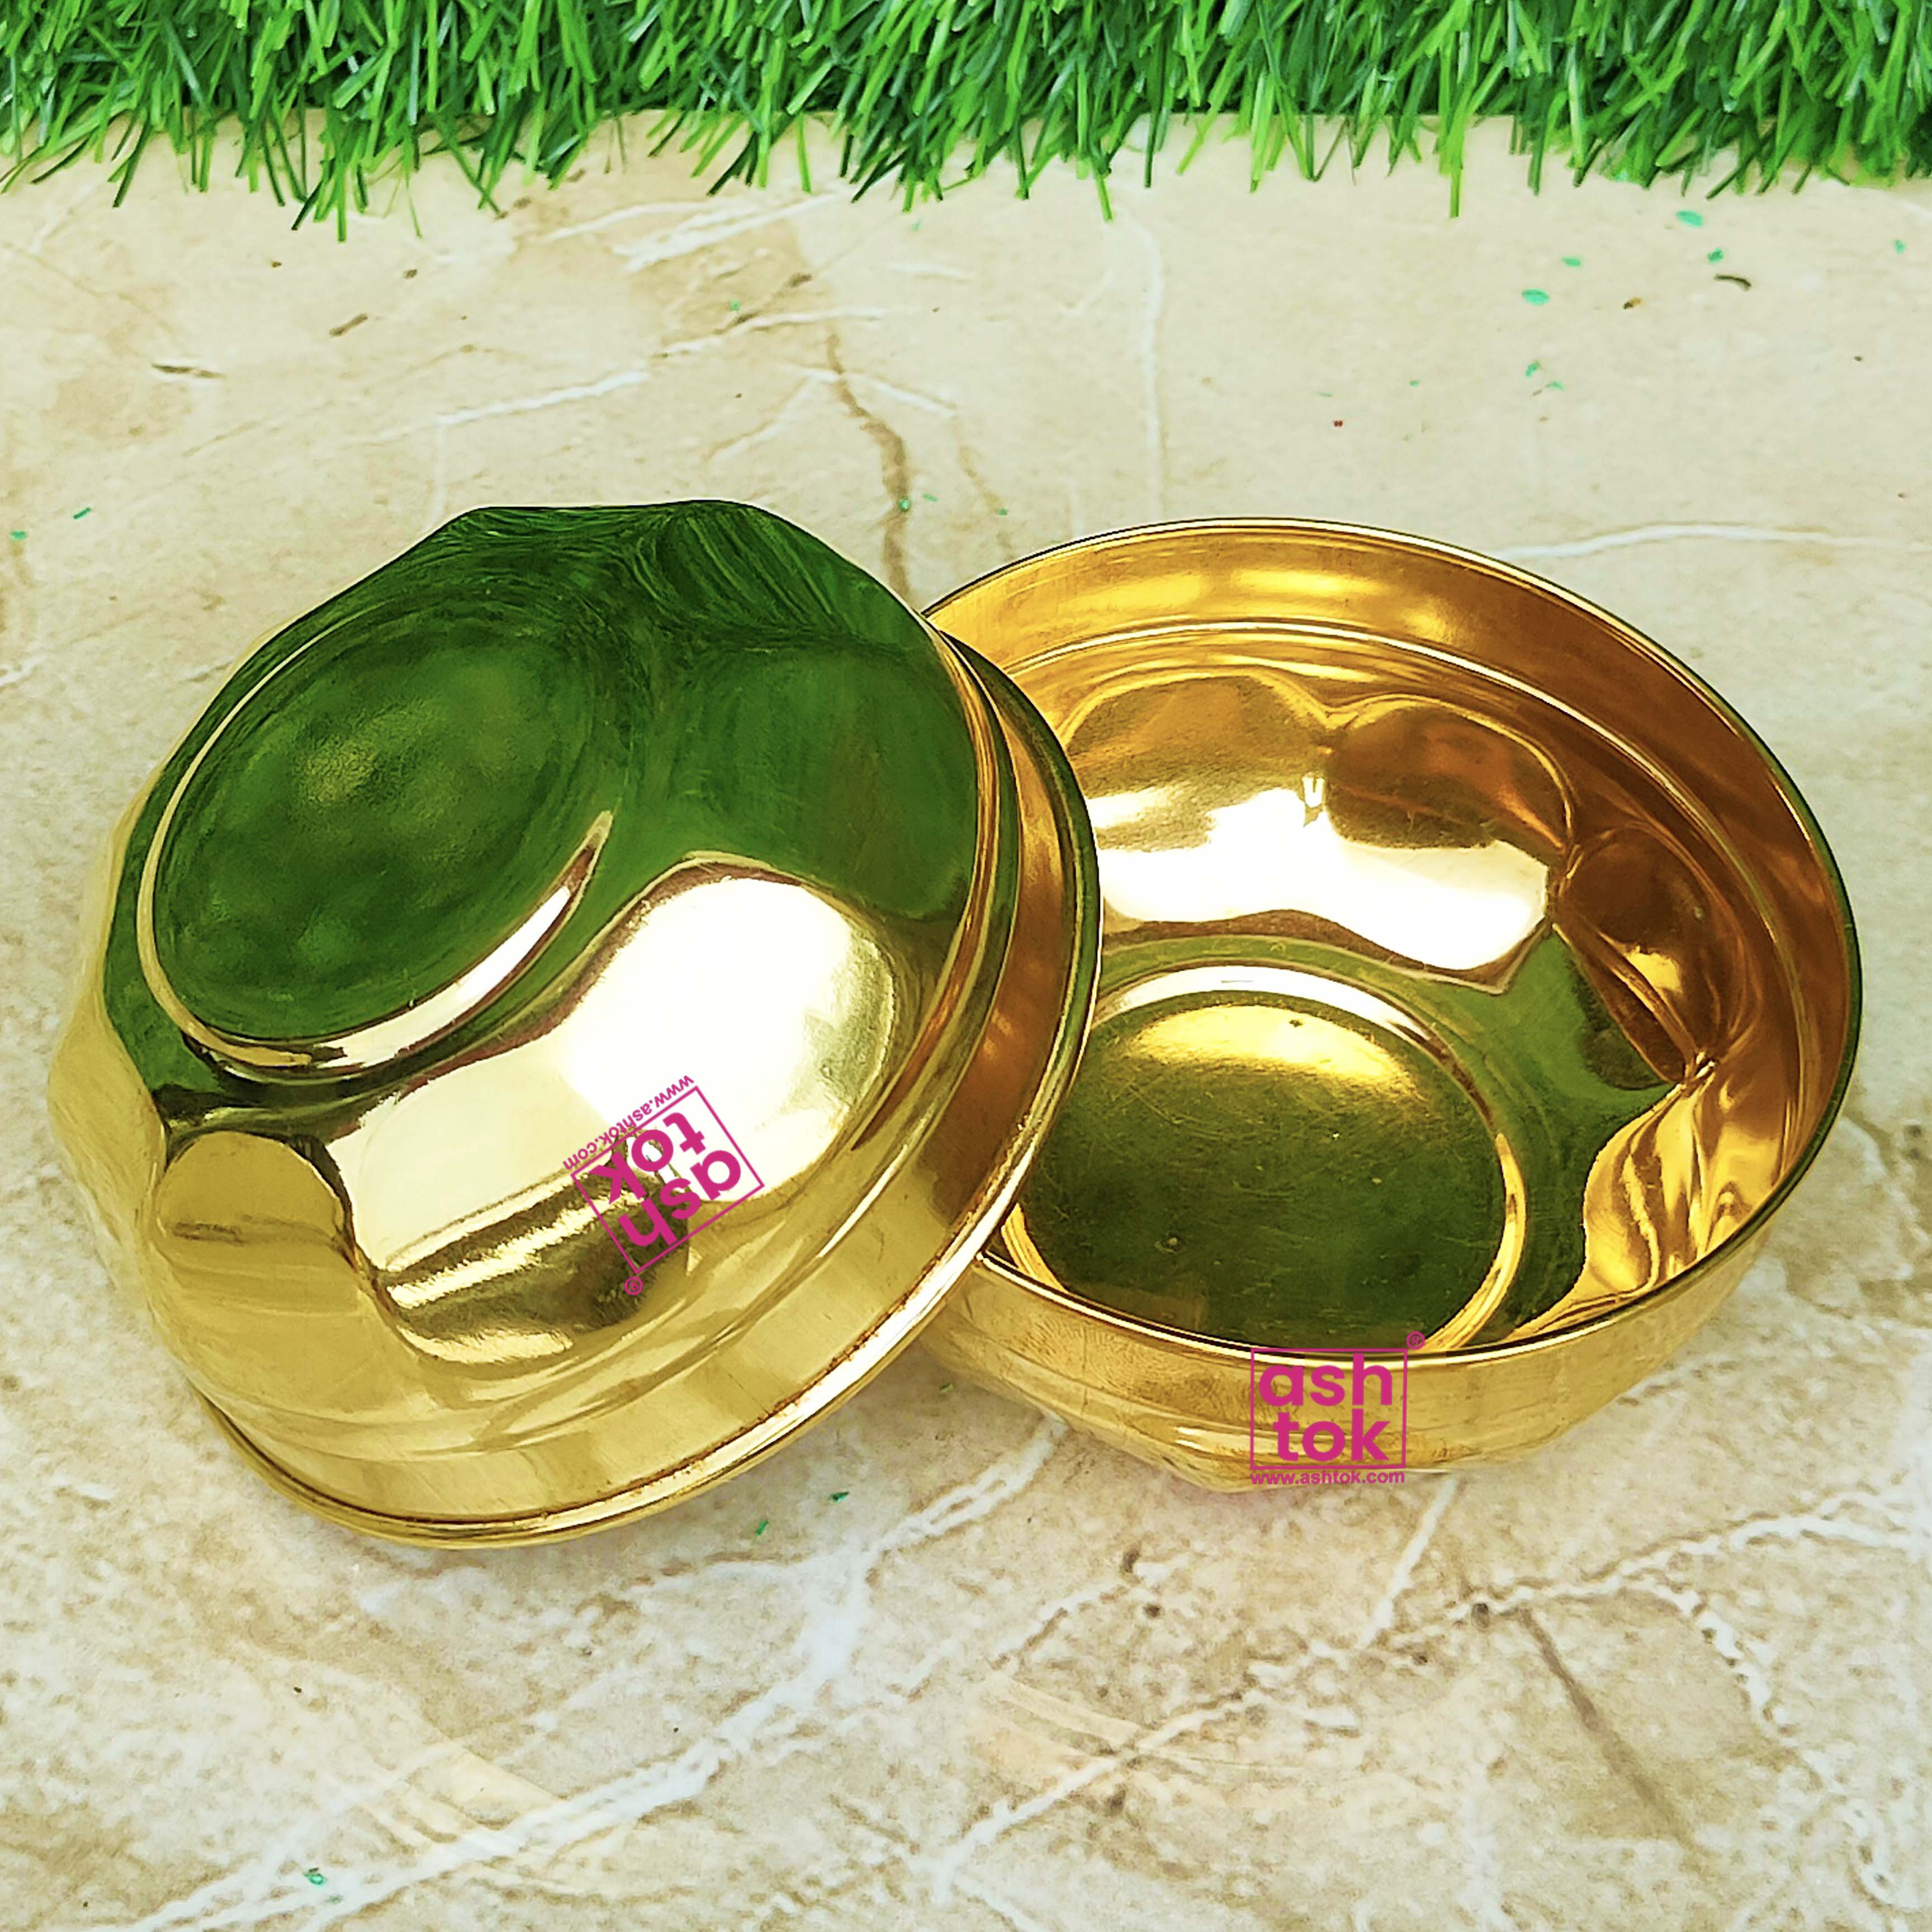 Buy Brass Bowl with Handles  Brass Gangalam at Best Price – Ashtok